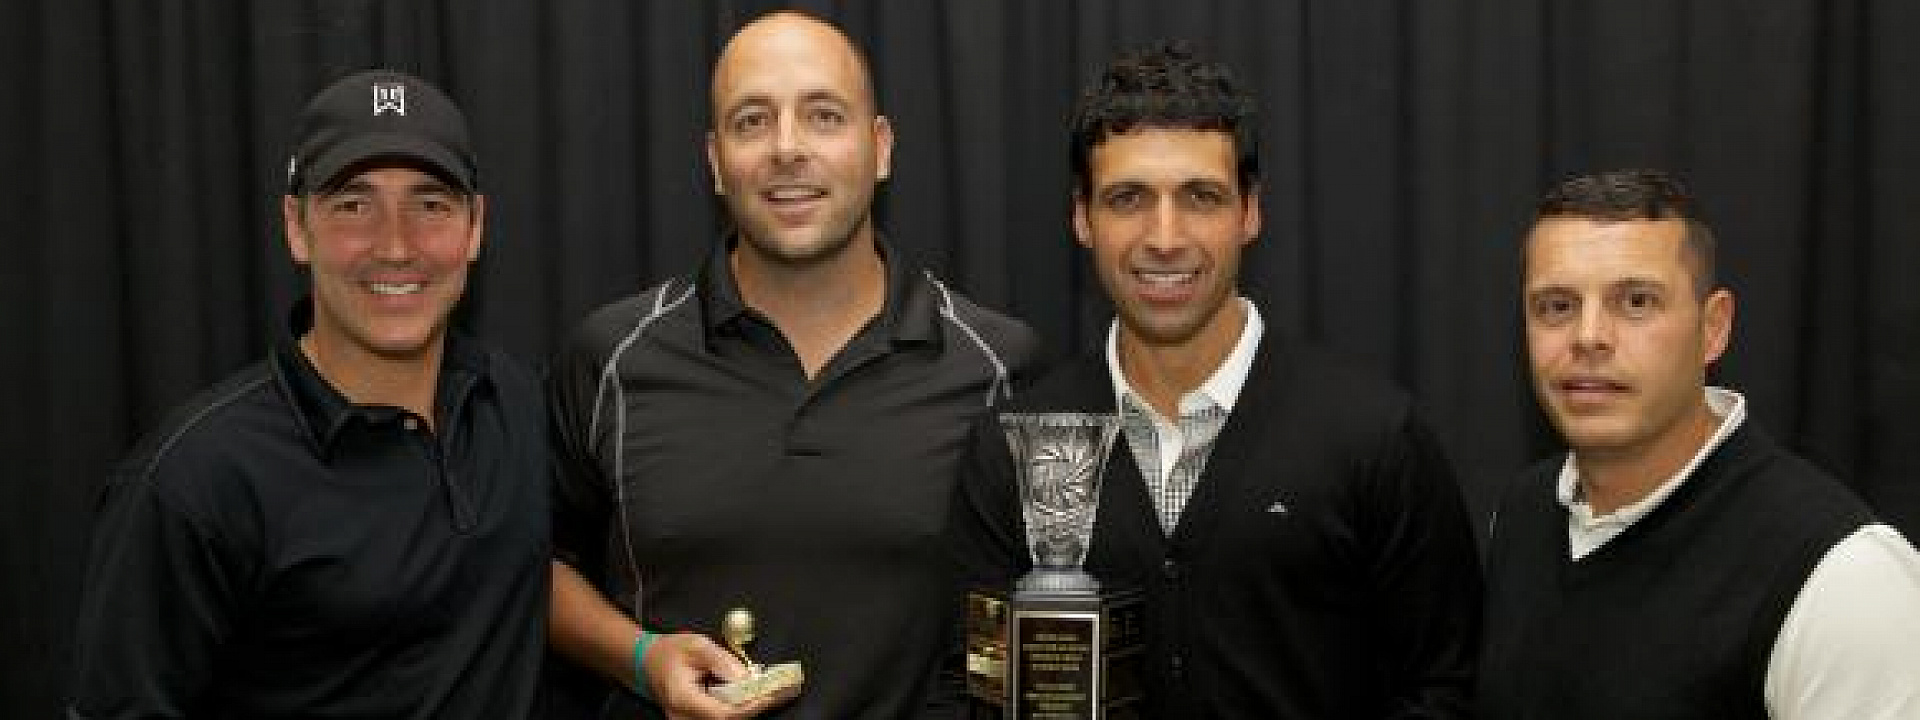 Gagnants du tournoi de golf Telfer 2012